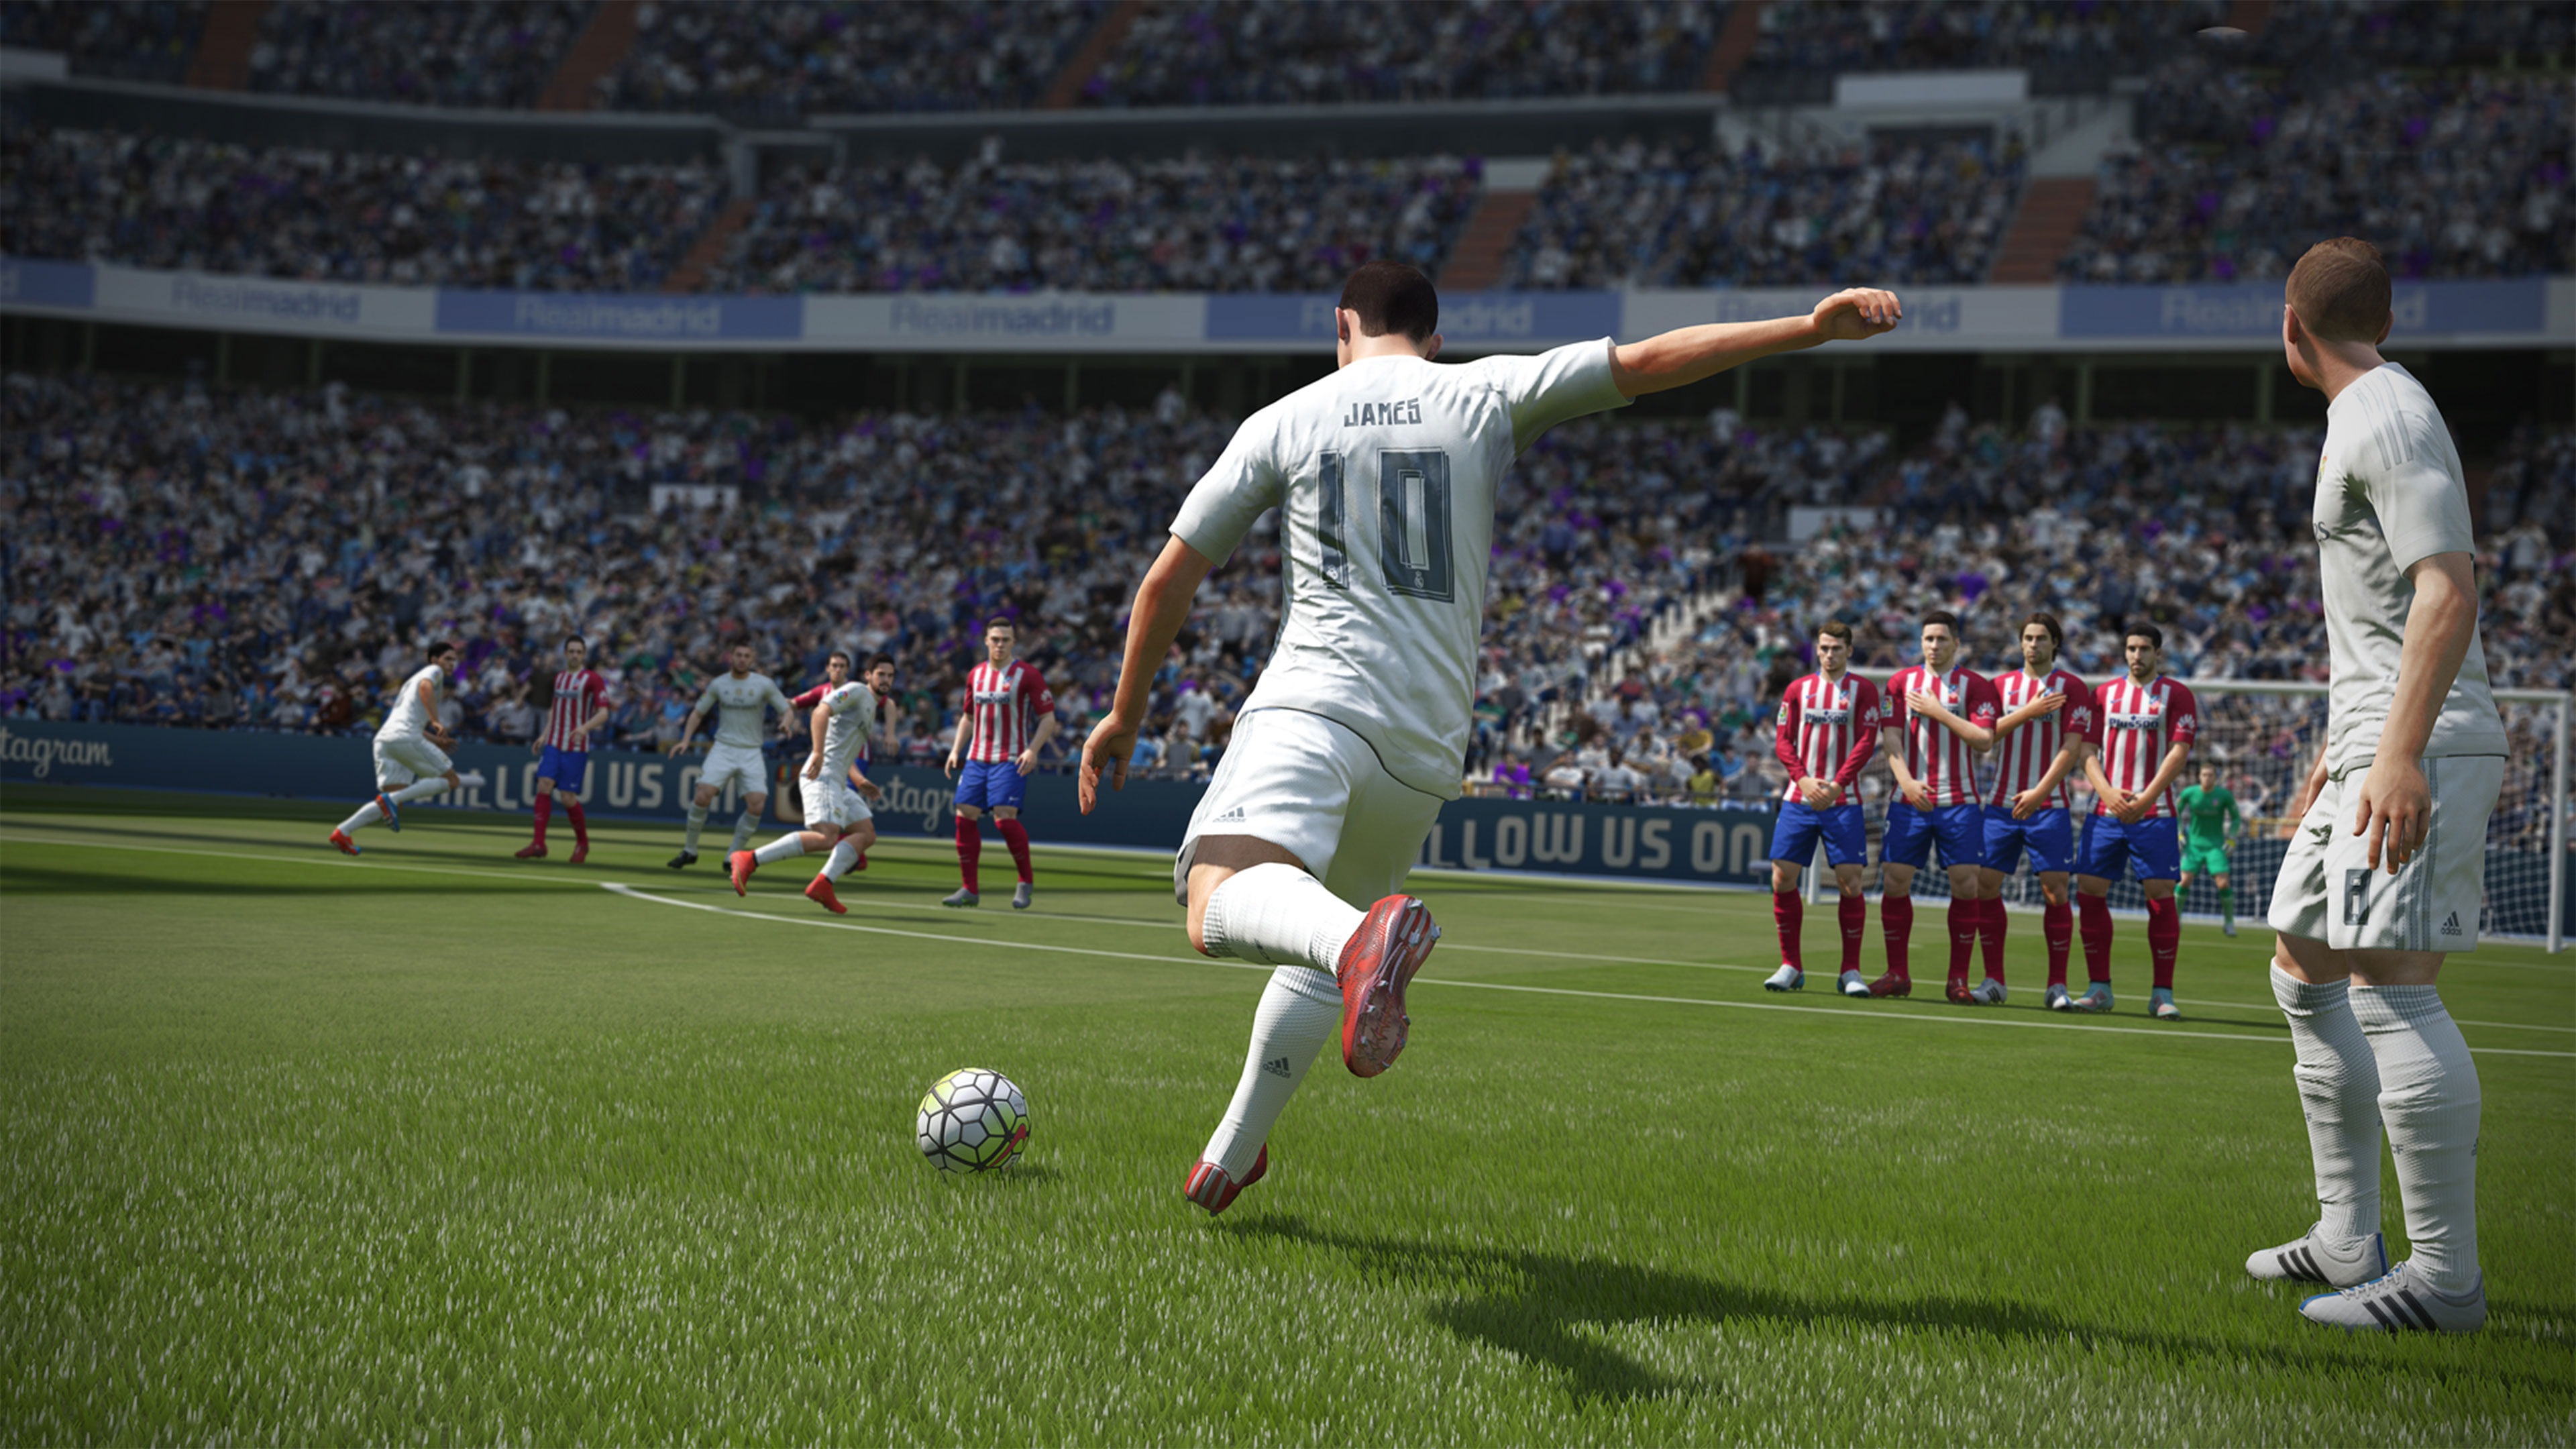 FIFA 17 Wallpapers in Ultra HD | 4K - Gameranx